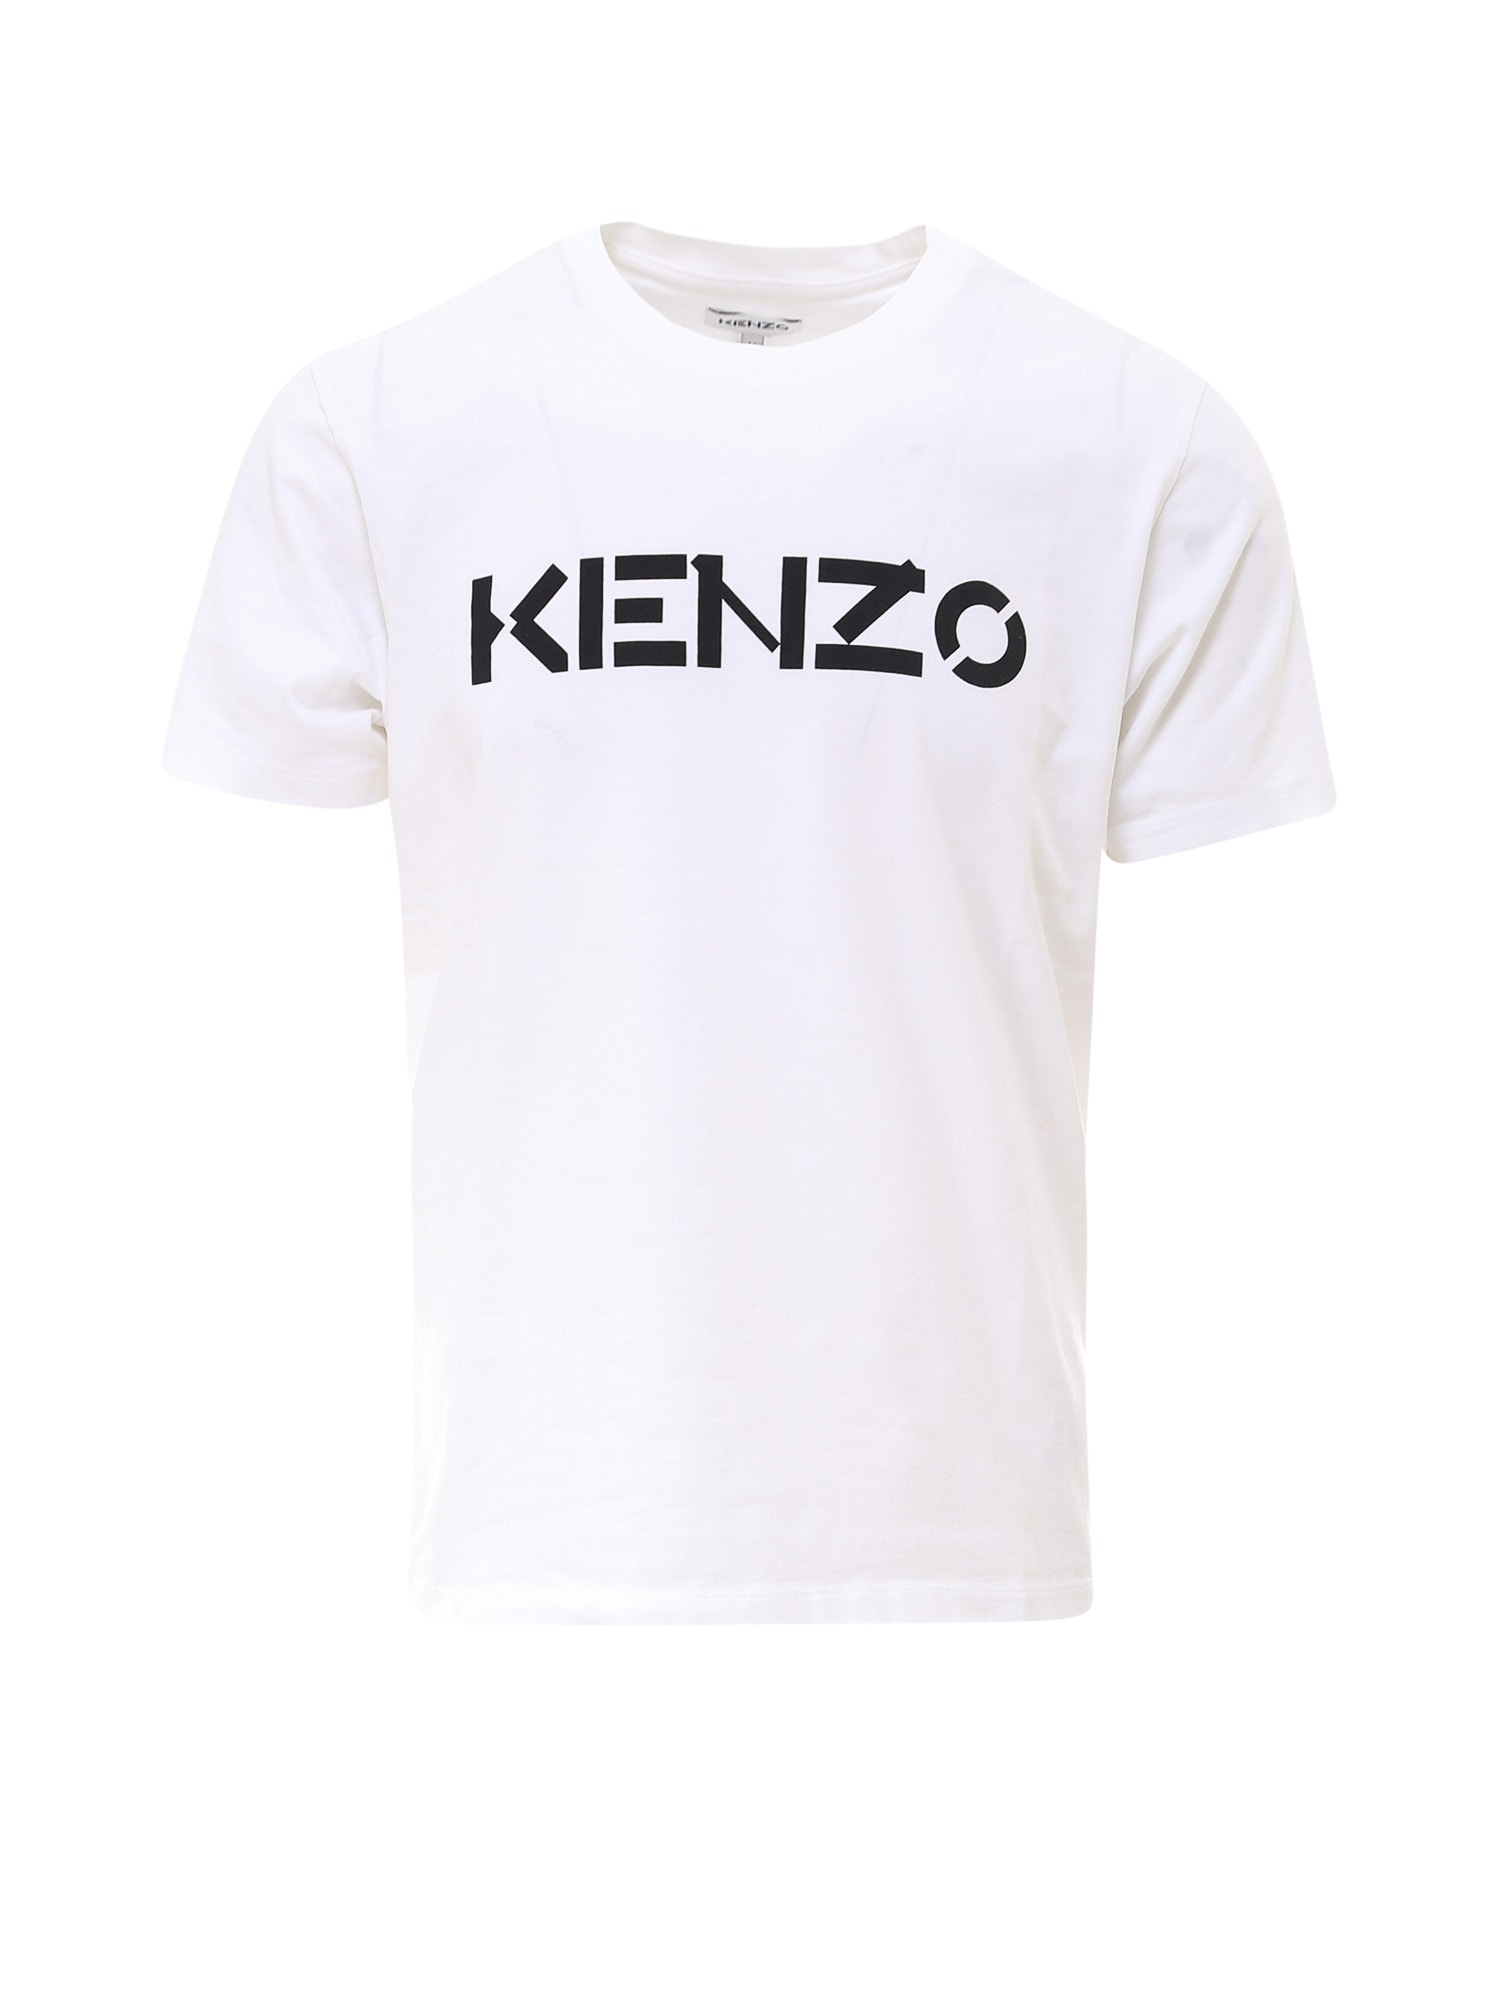 KENZO T-SHIRT,11828080